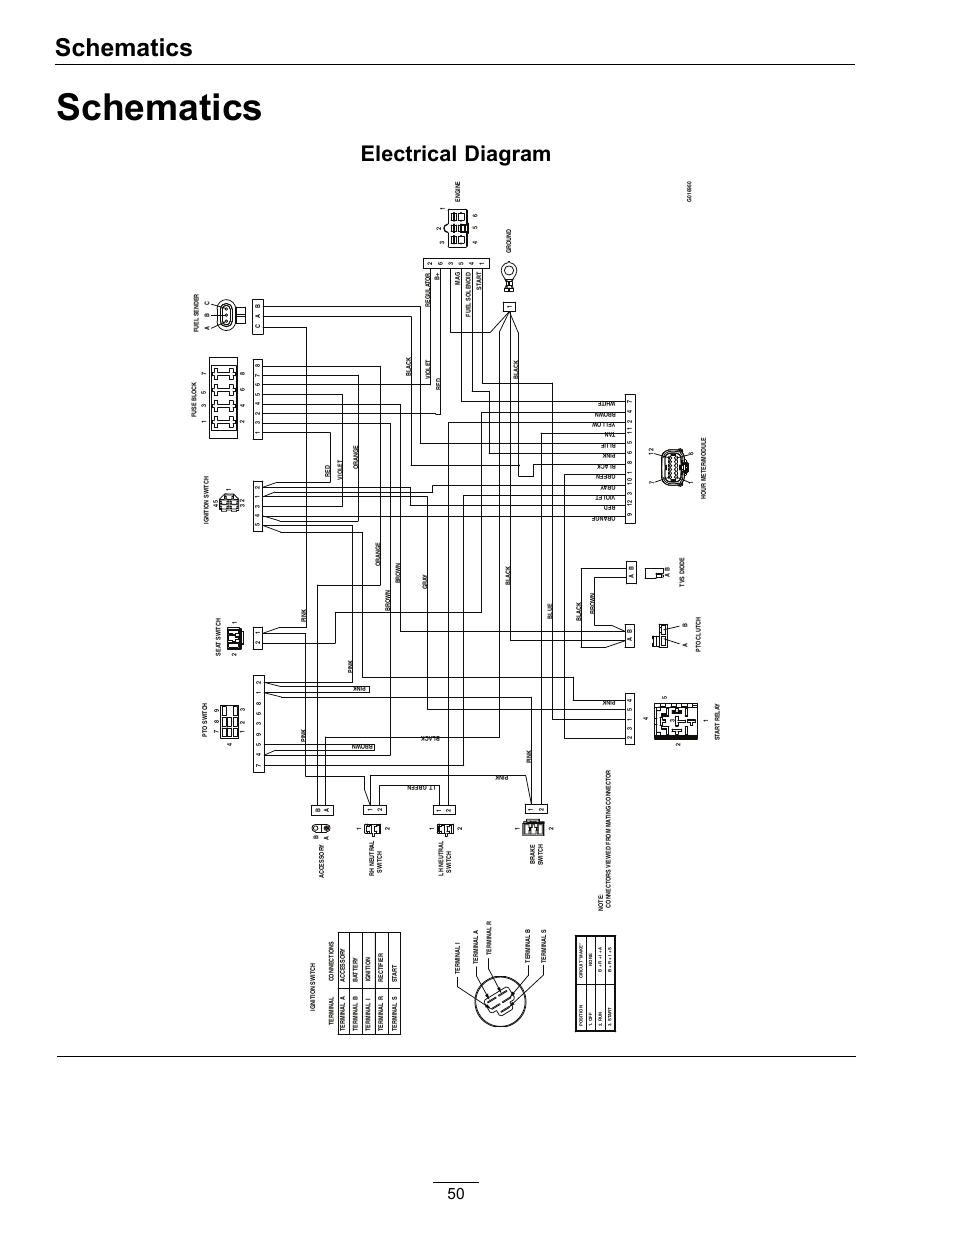 3t40 transmission diagram